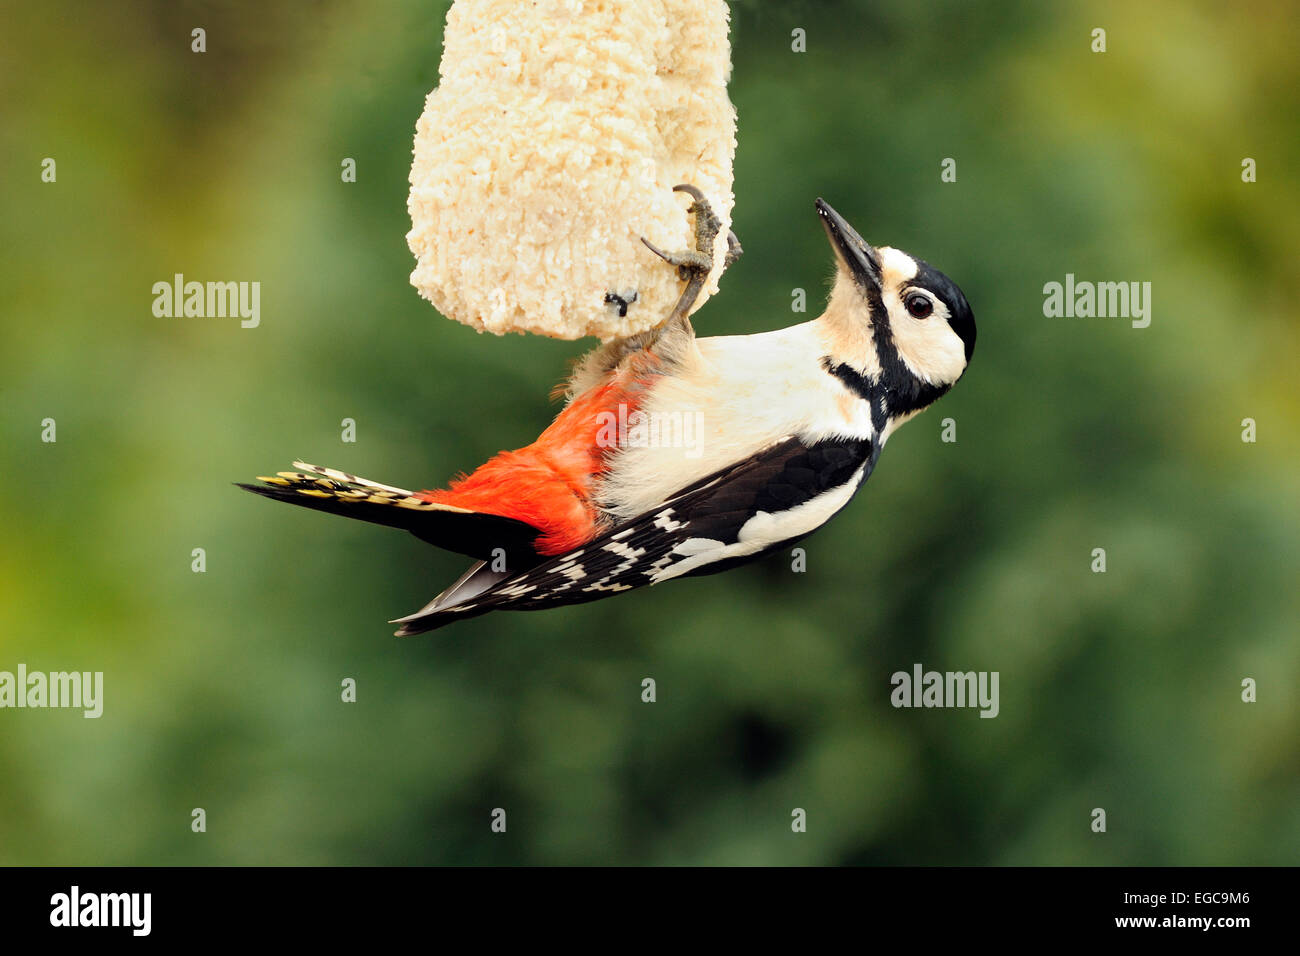 Great Spotted Woodpecker; Dendrocopos major feeding from suet cake, woodpecker on fat feeder in garden Stock Photo